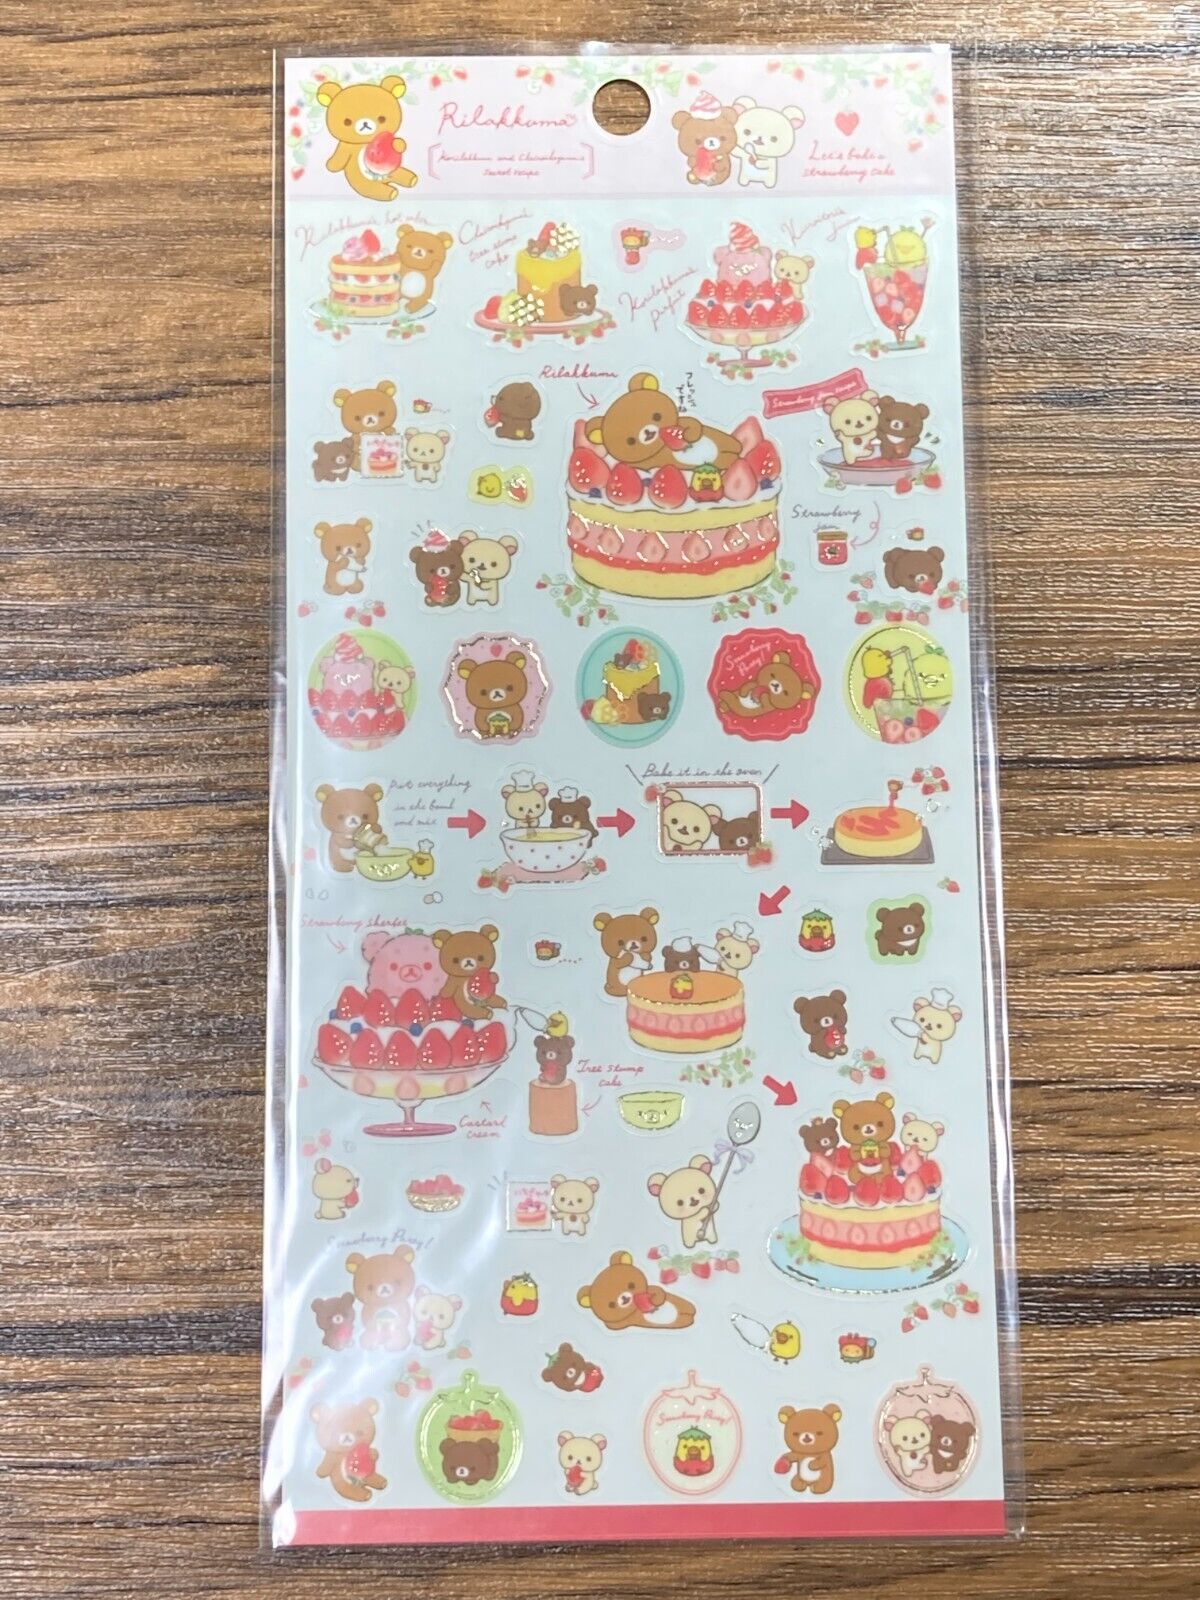 Free Shipping Rilakkuma Original Sticker Sheet NEW San-X Japan Rare 2018